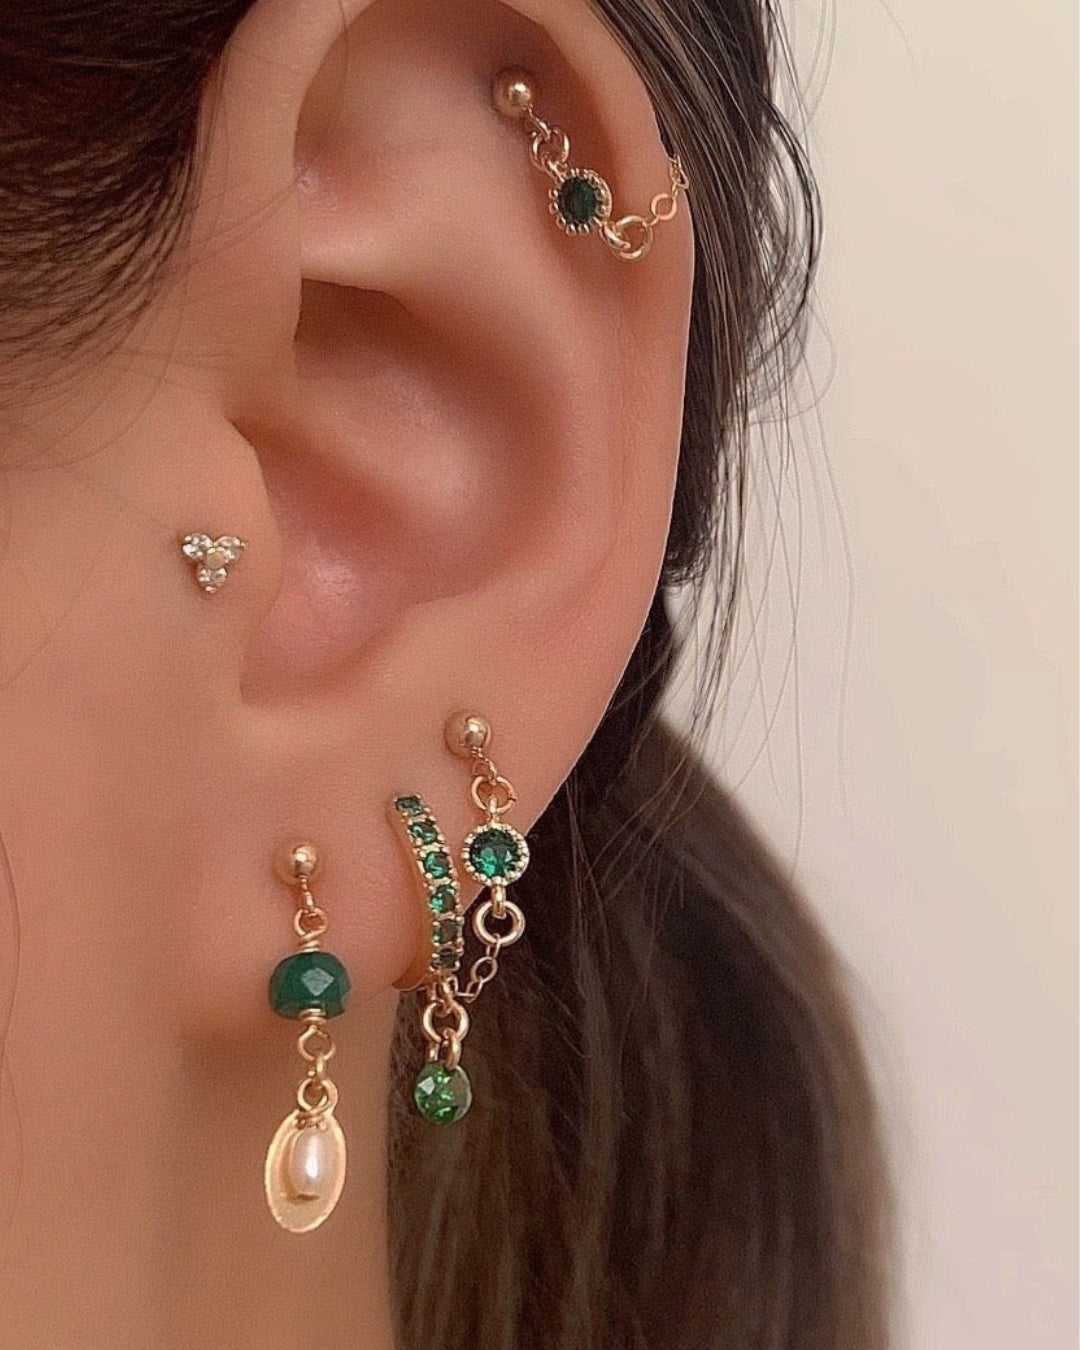 14k gold fill envy chain studs earrings in green emerald cubic zirconia crystal on a model 